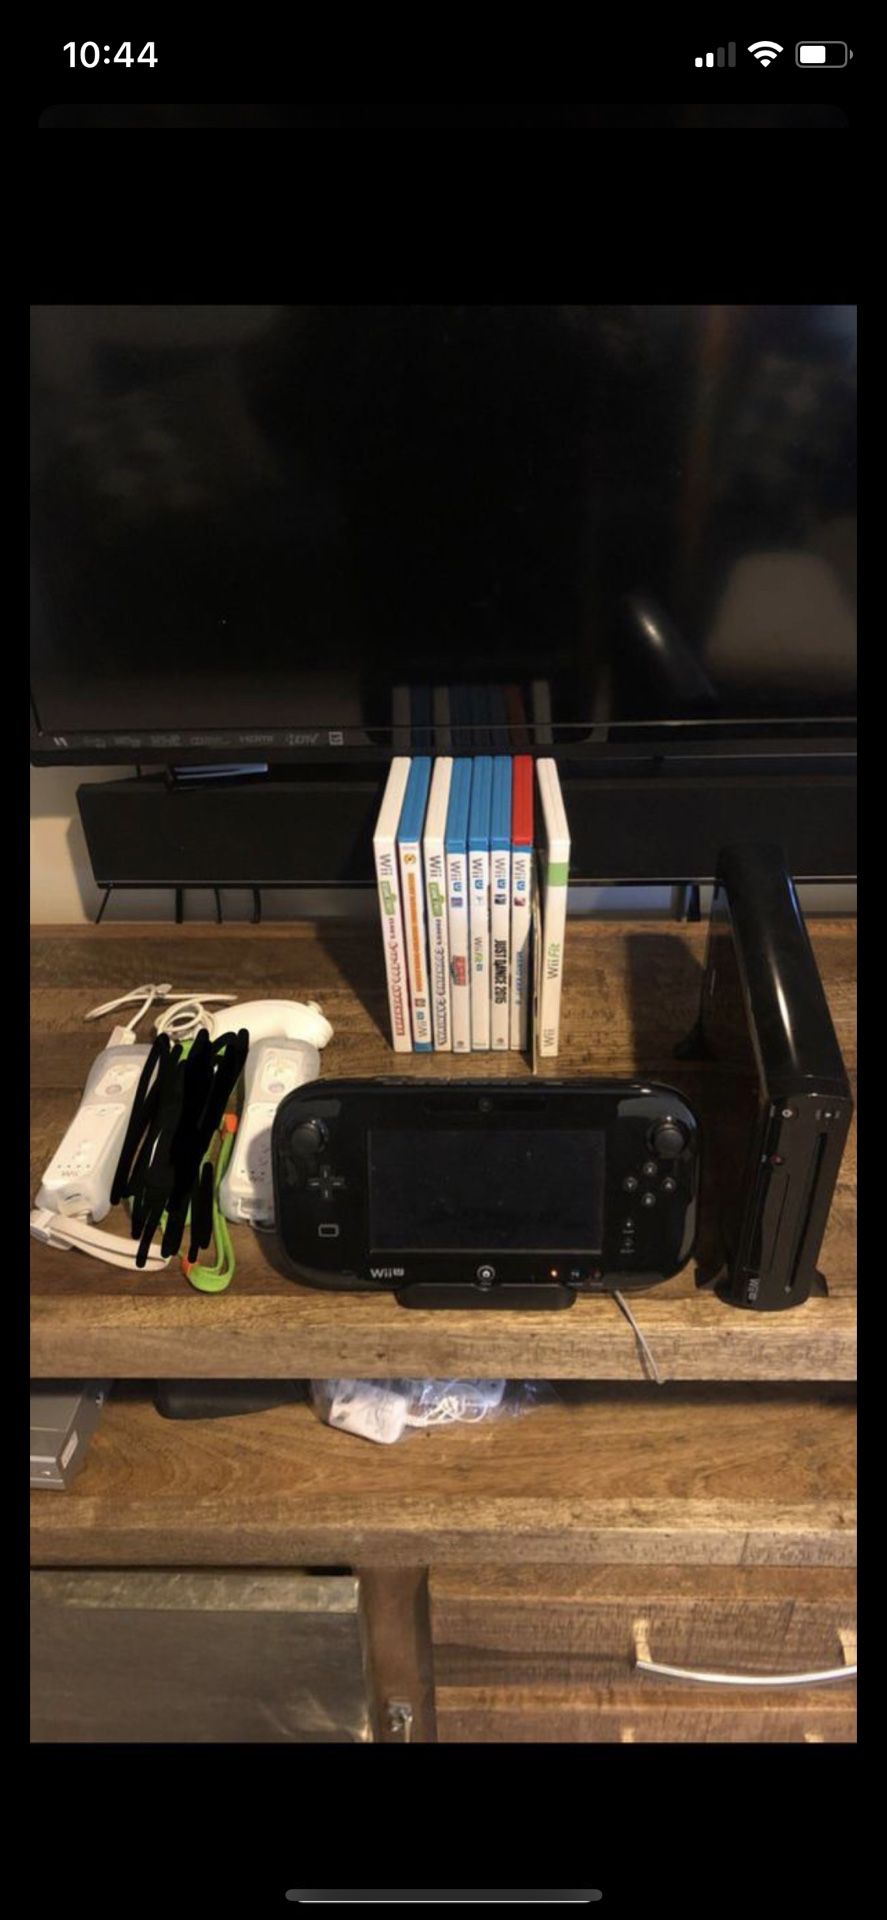 Wii U, balance board and games